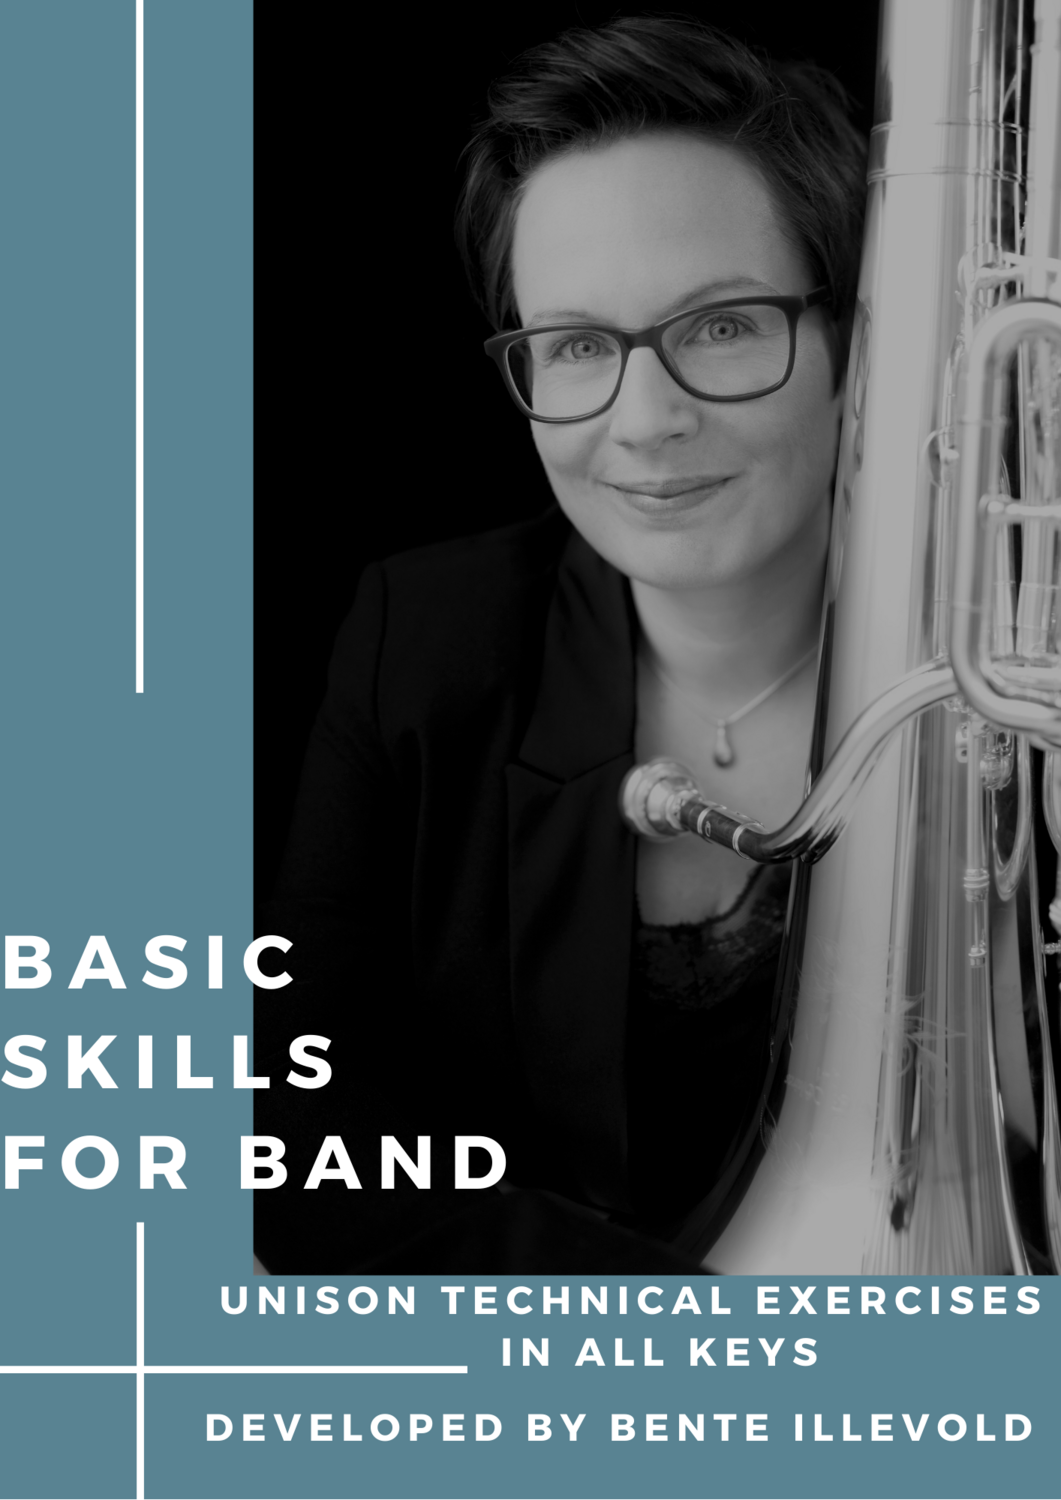 ​Basic skills for band